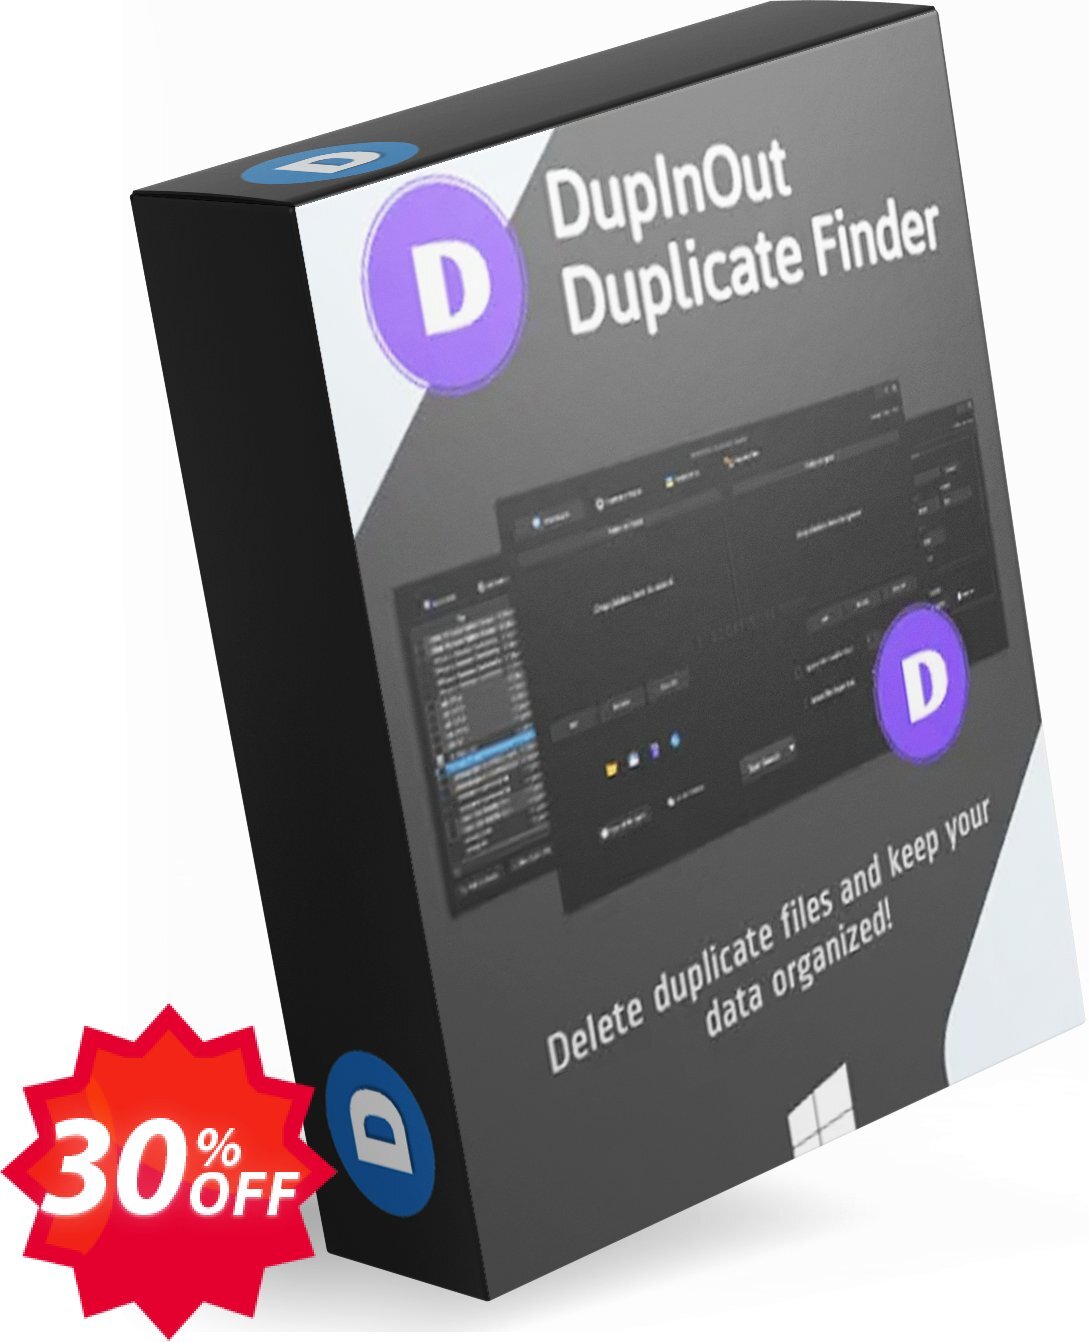 DupInOut Duplicate Finder Coupon code 30% discount 